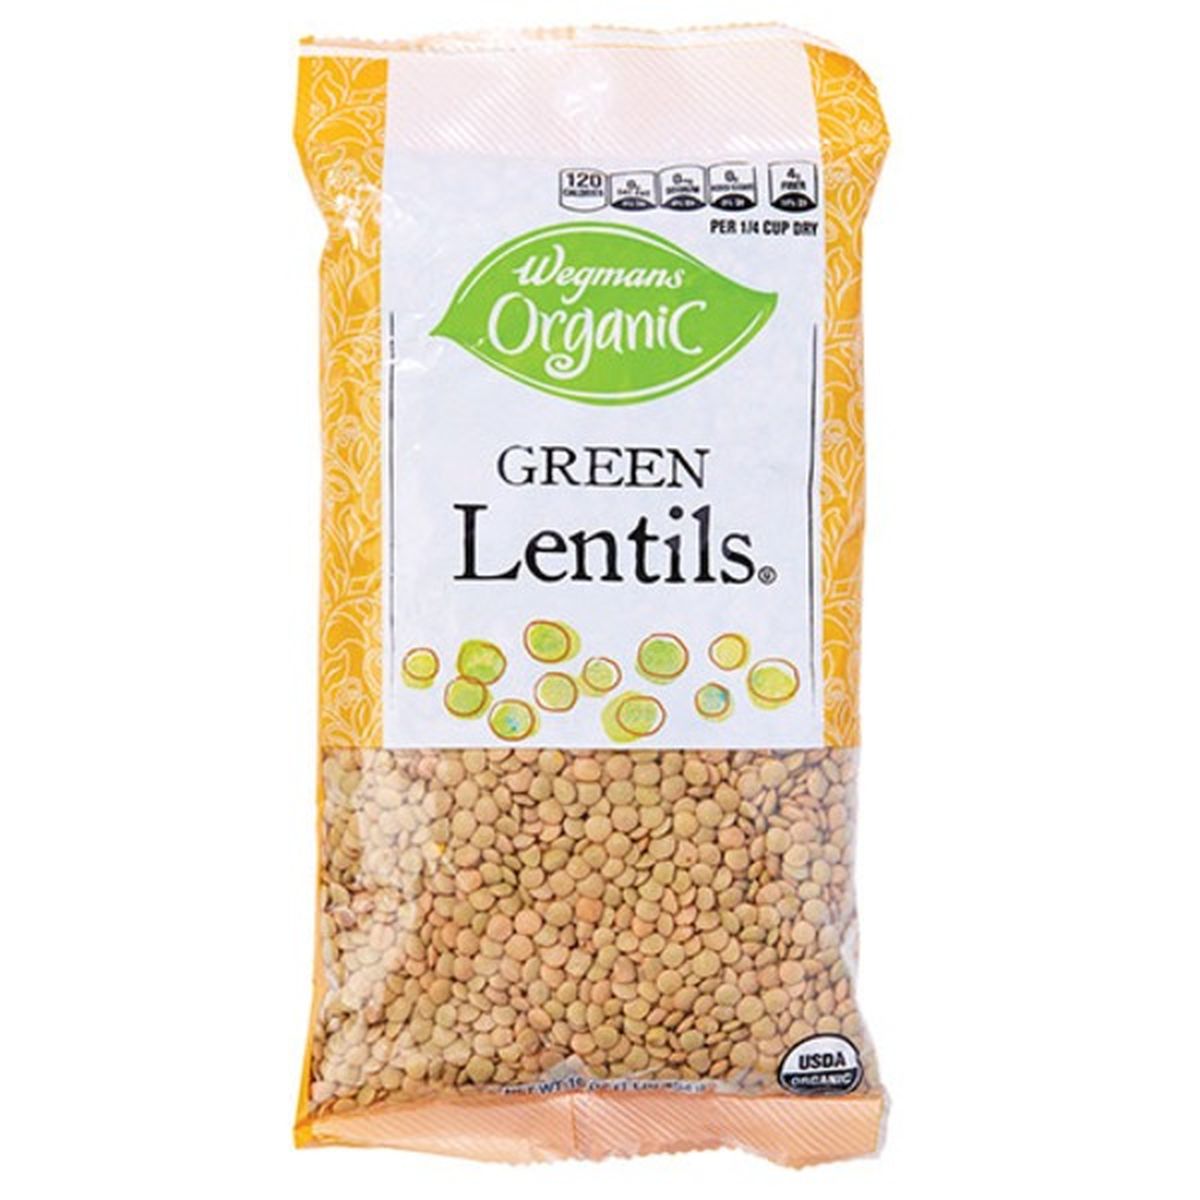 Calories in Wegmans Organic Green Lentils, Dry